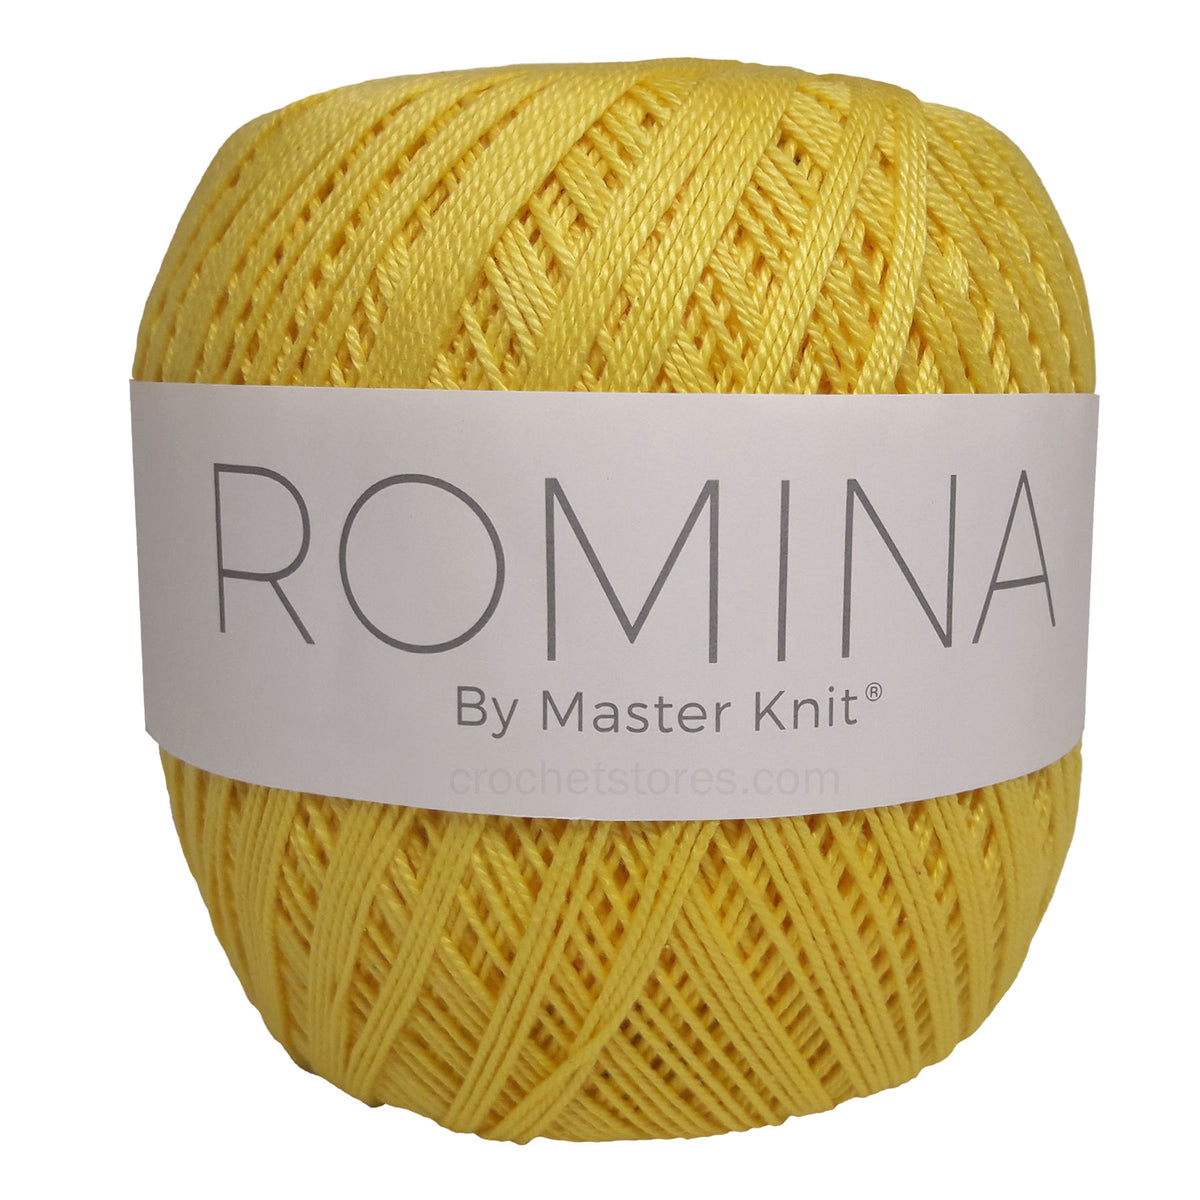 ROMINA - Crochetstores9335-184745051438517